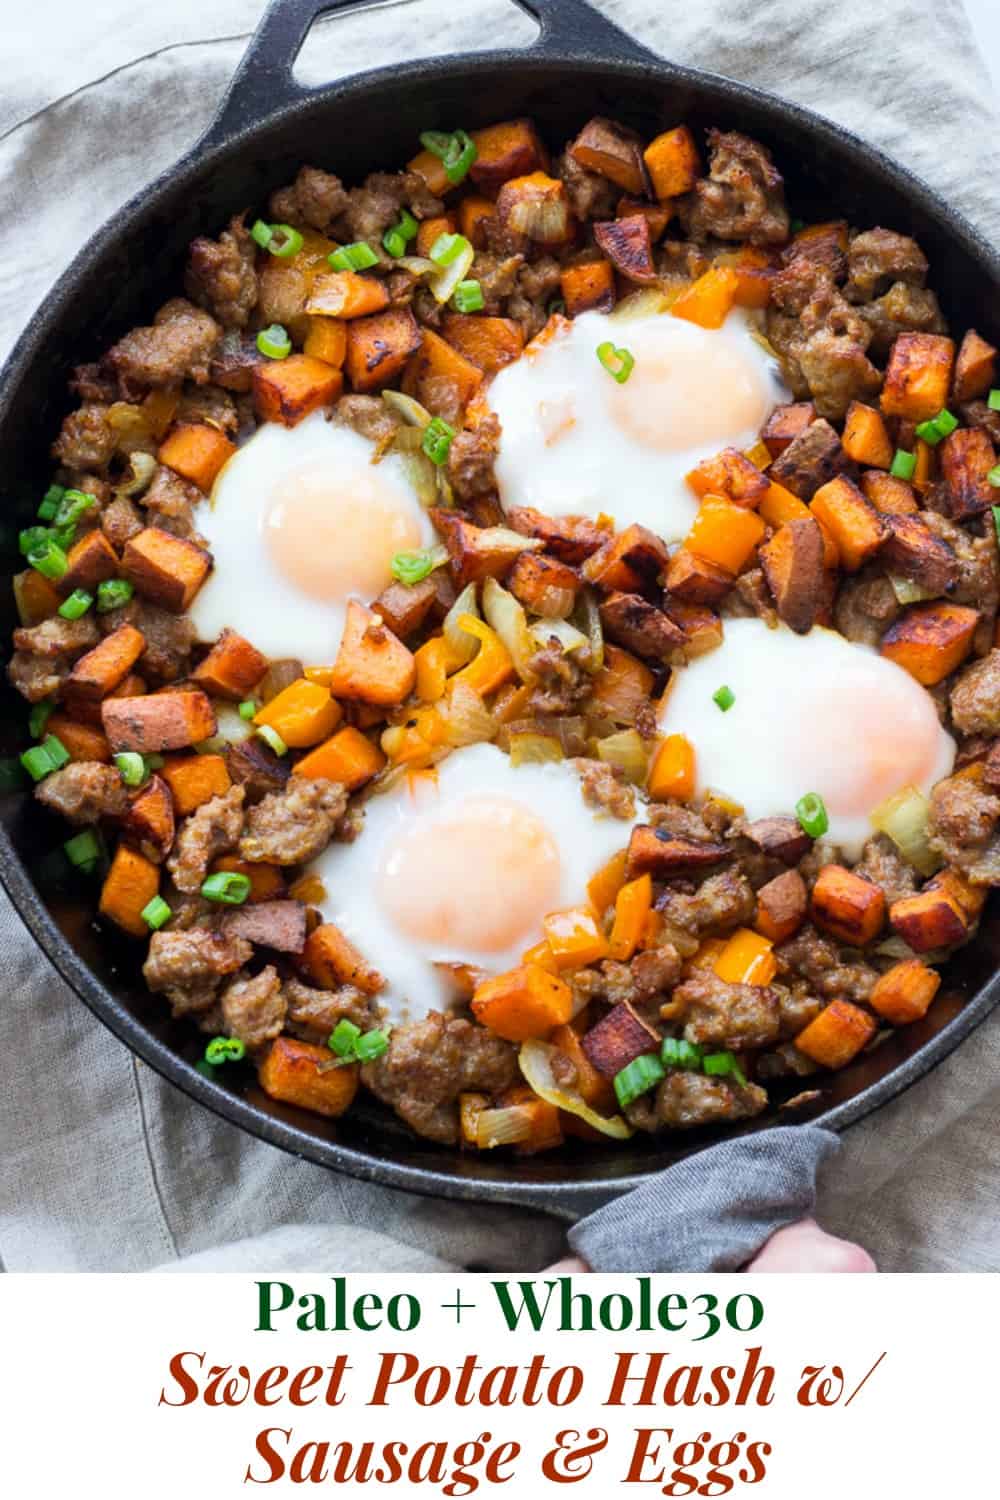 Eggs Potatoes and Chorizo Breakfast Skillet Recipe